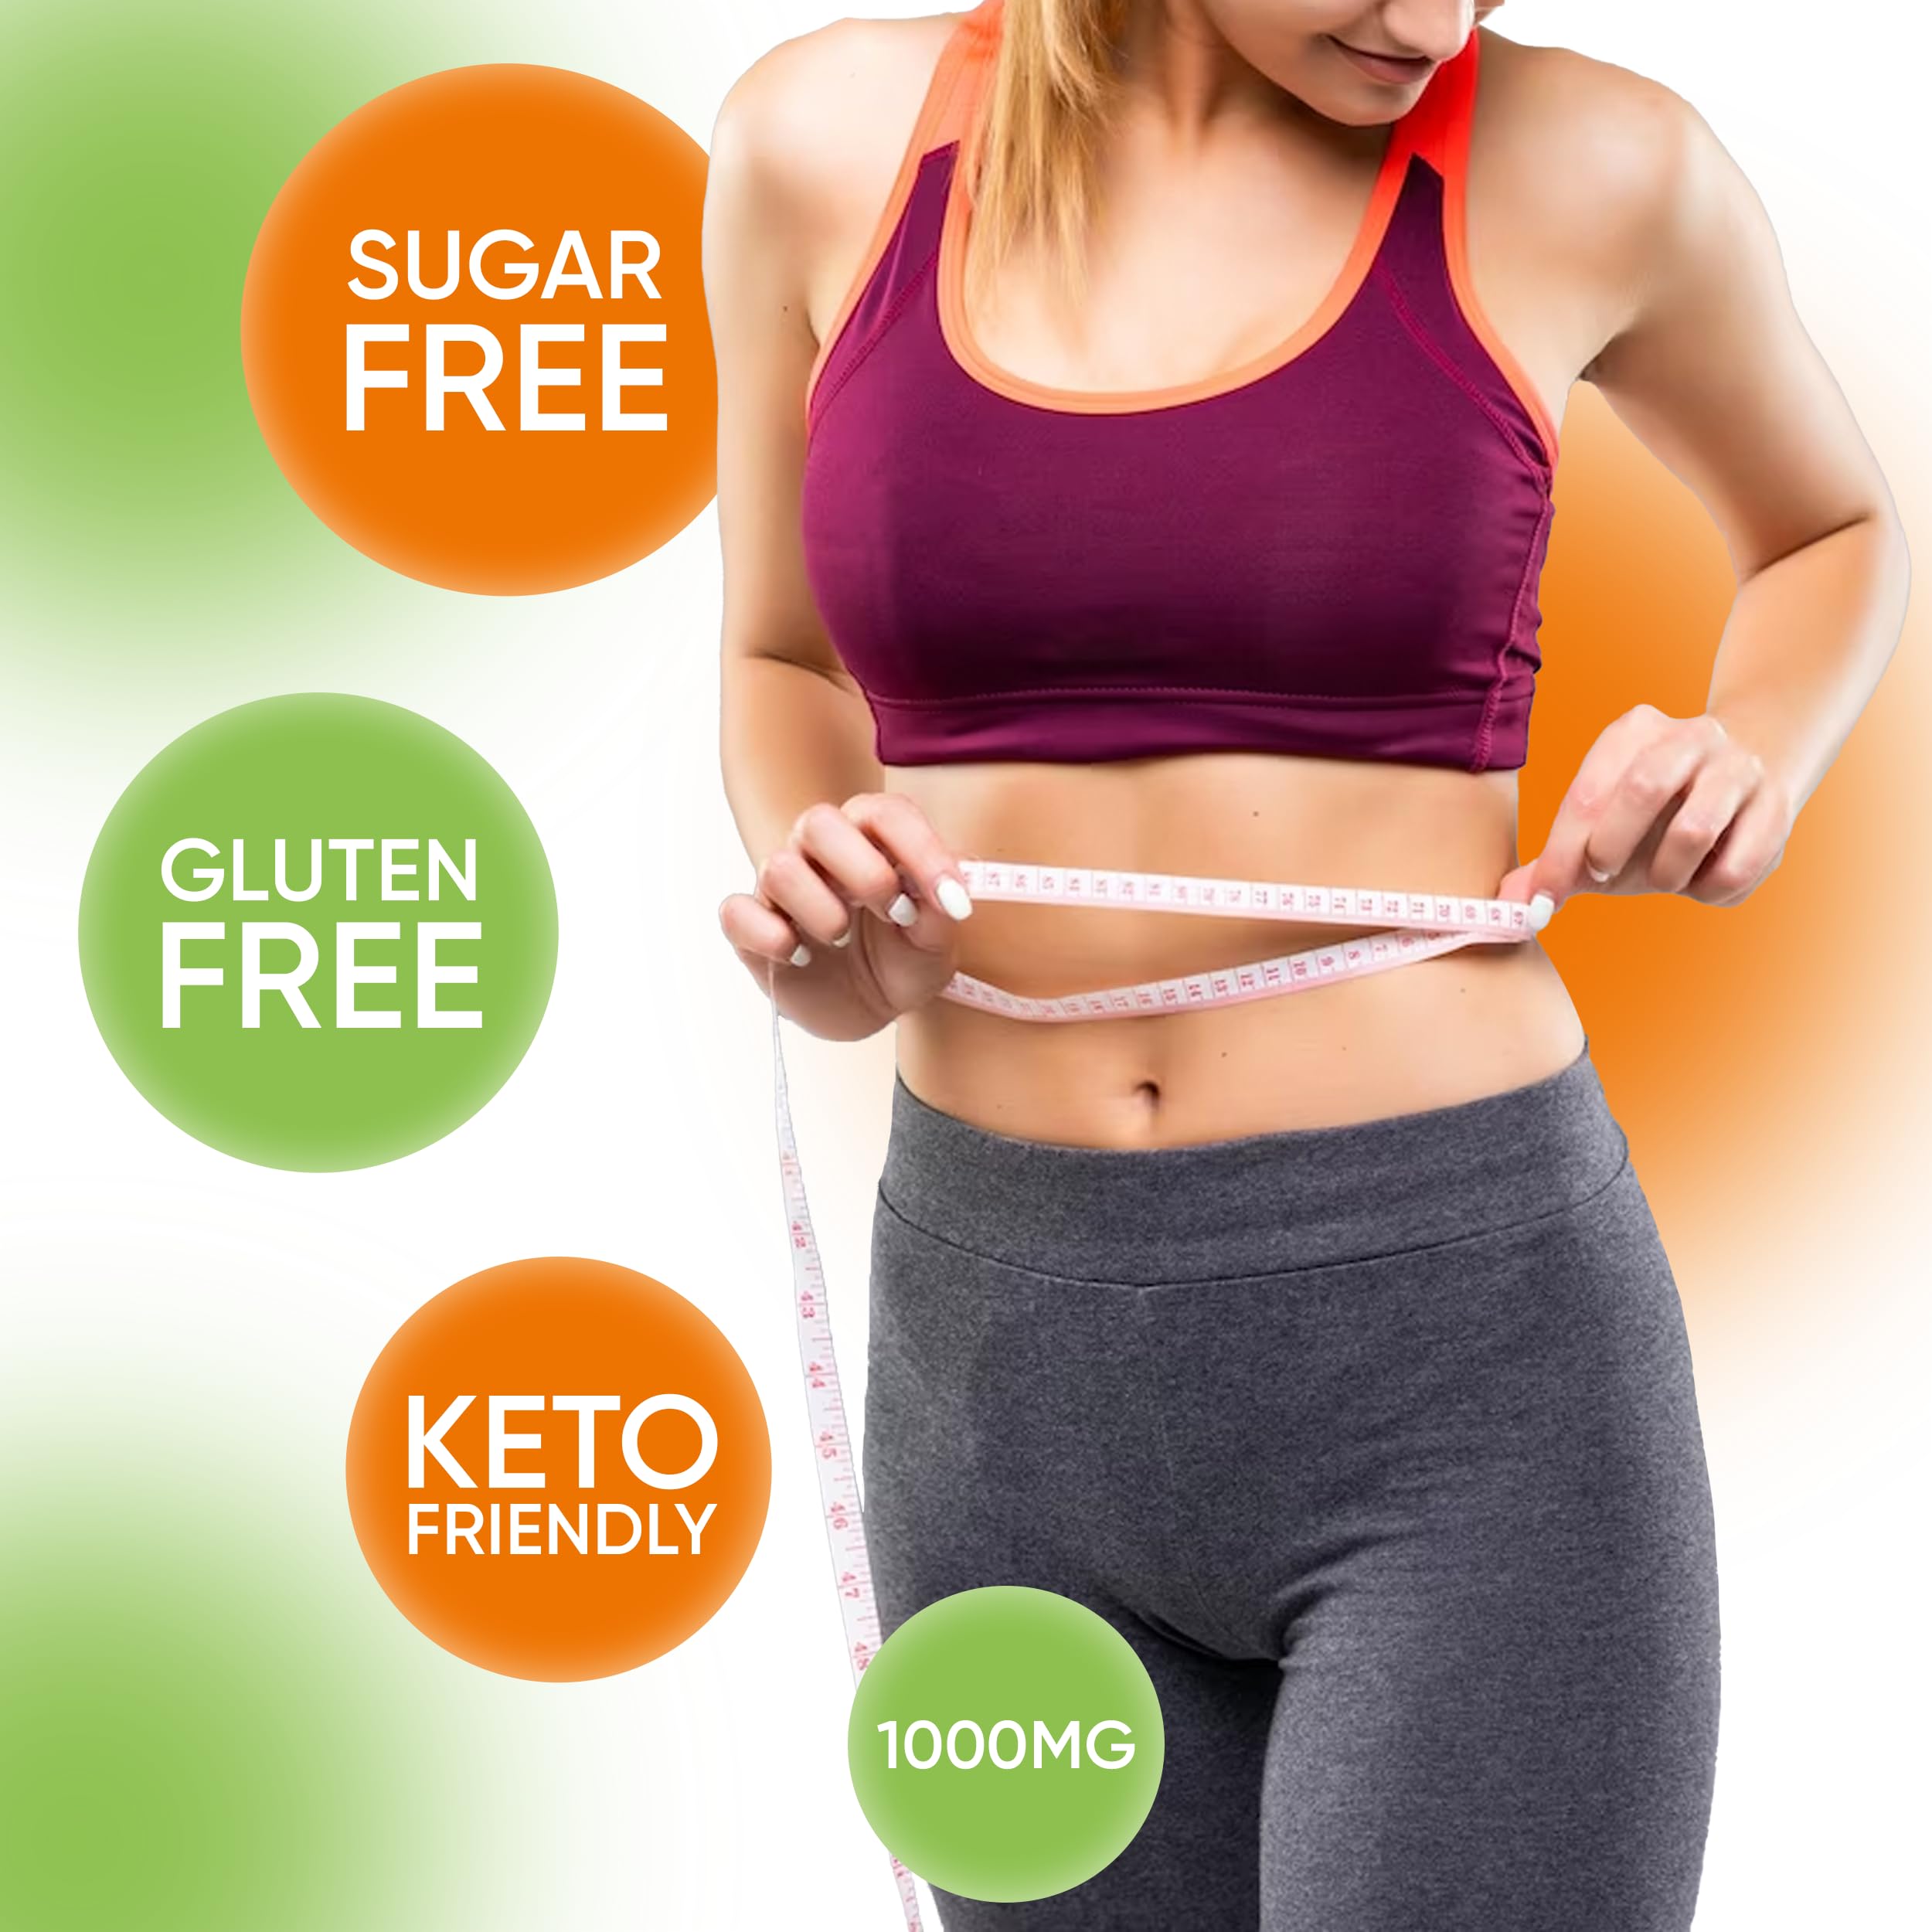 Gluten & Sugar Free Keto ACV Gummies for Advanced Weight Loss & Belly Fat Burn - Pro Active Super Apple Cider Vinegar Diet Supplement for Women Men (1000MG)